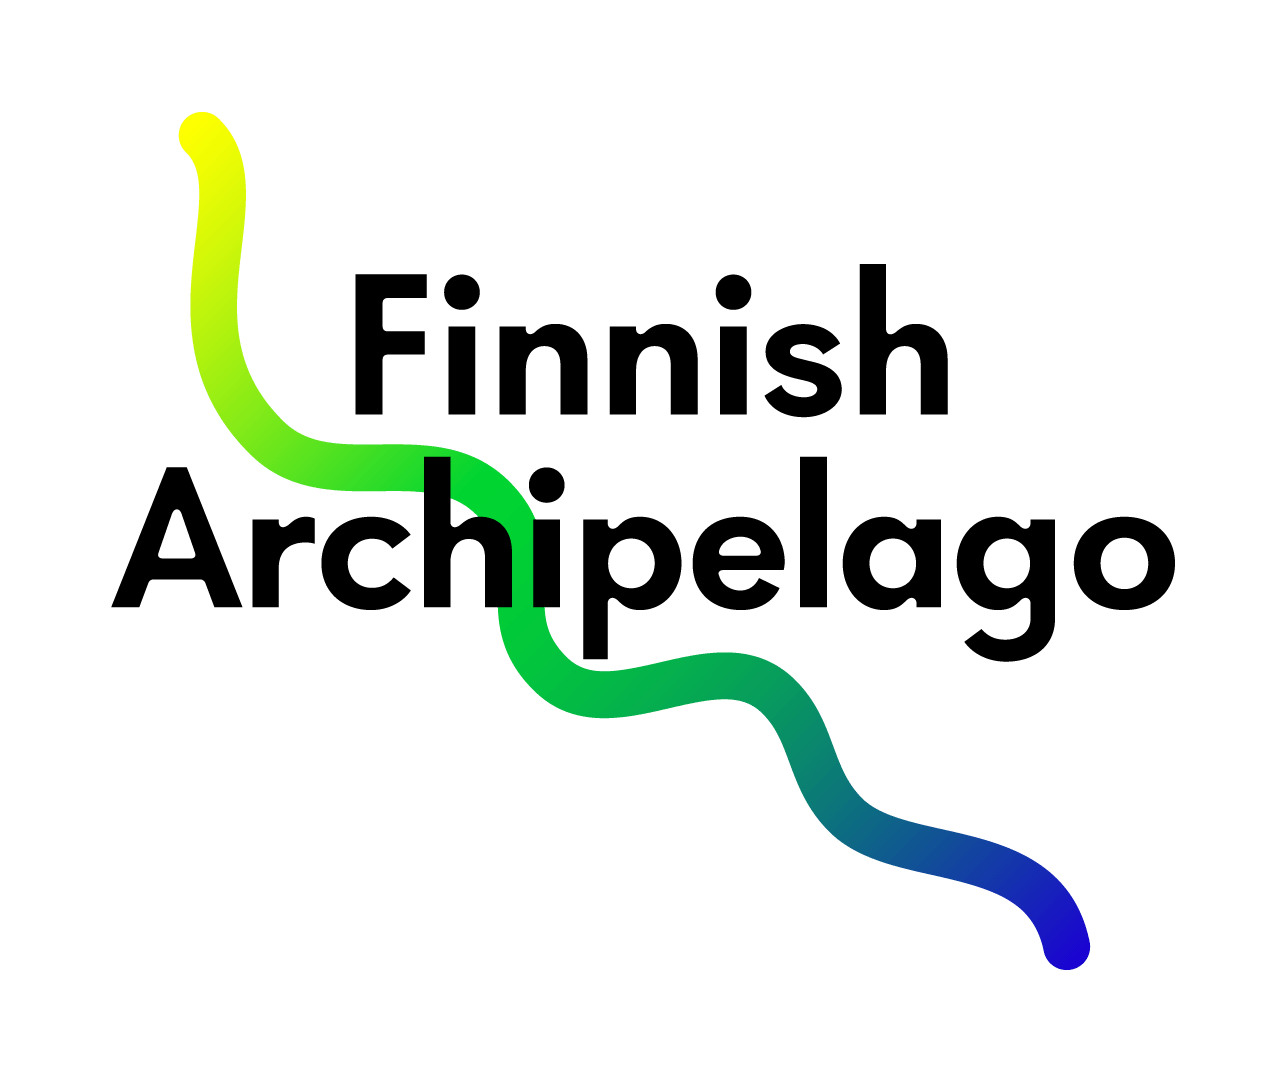 Finnish Archipelago Logo